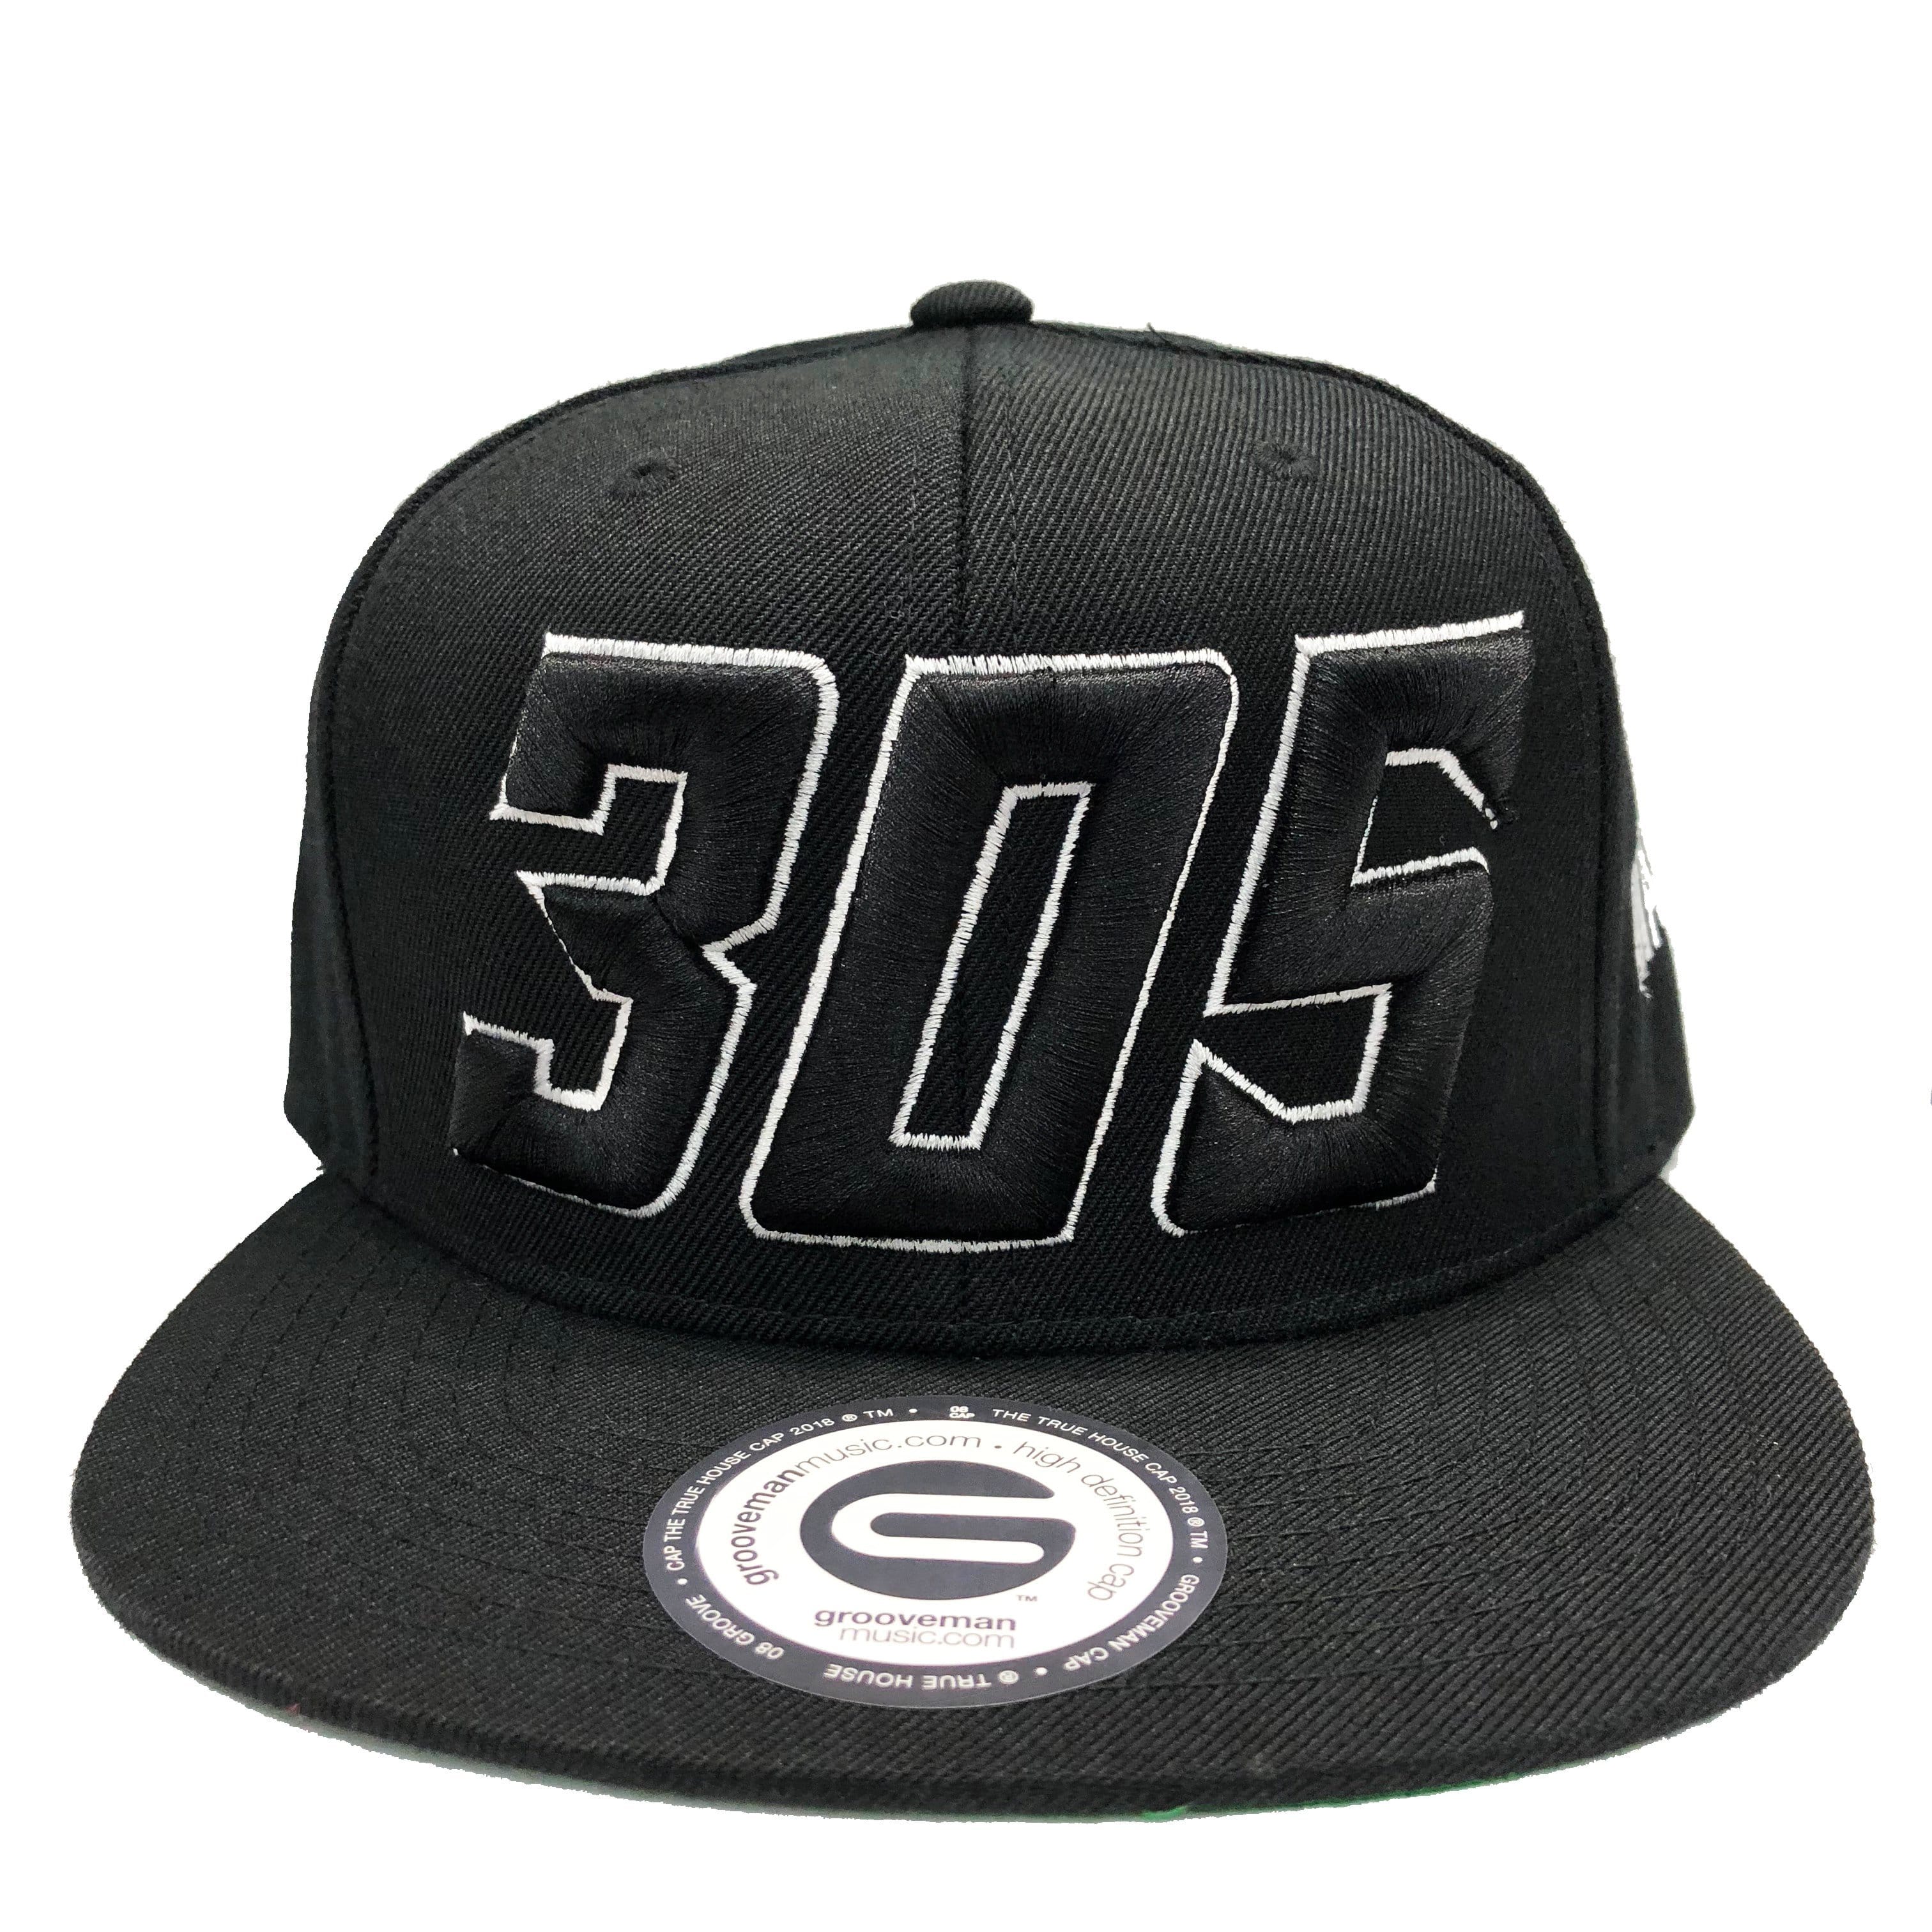 Grooveman Music Hats One Size / Black/White 305 Snapback Cap